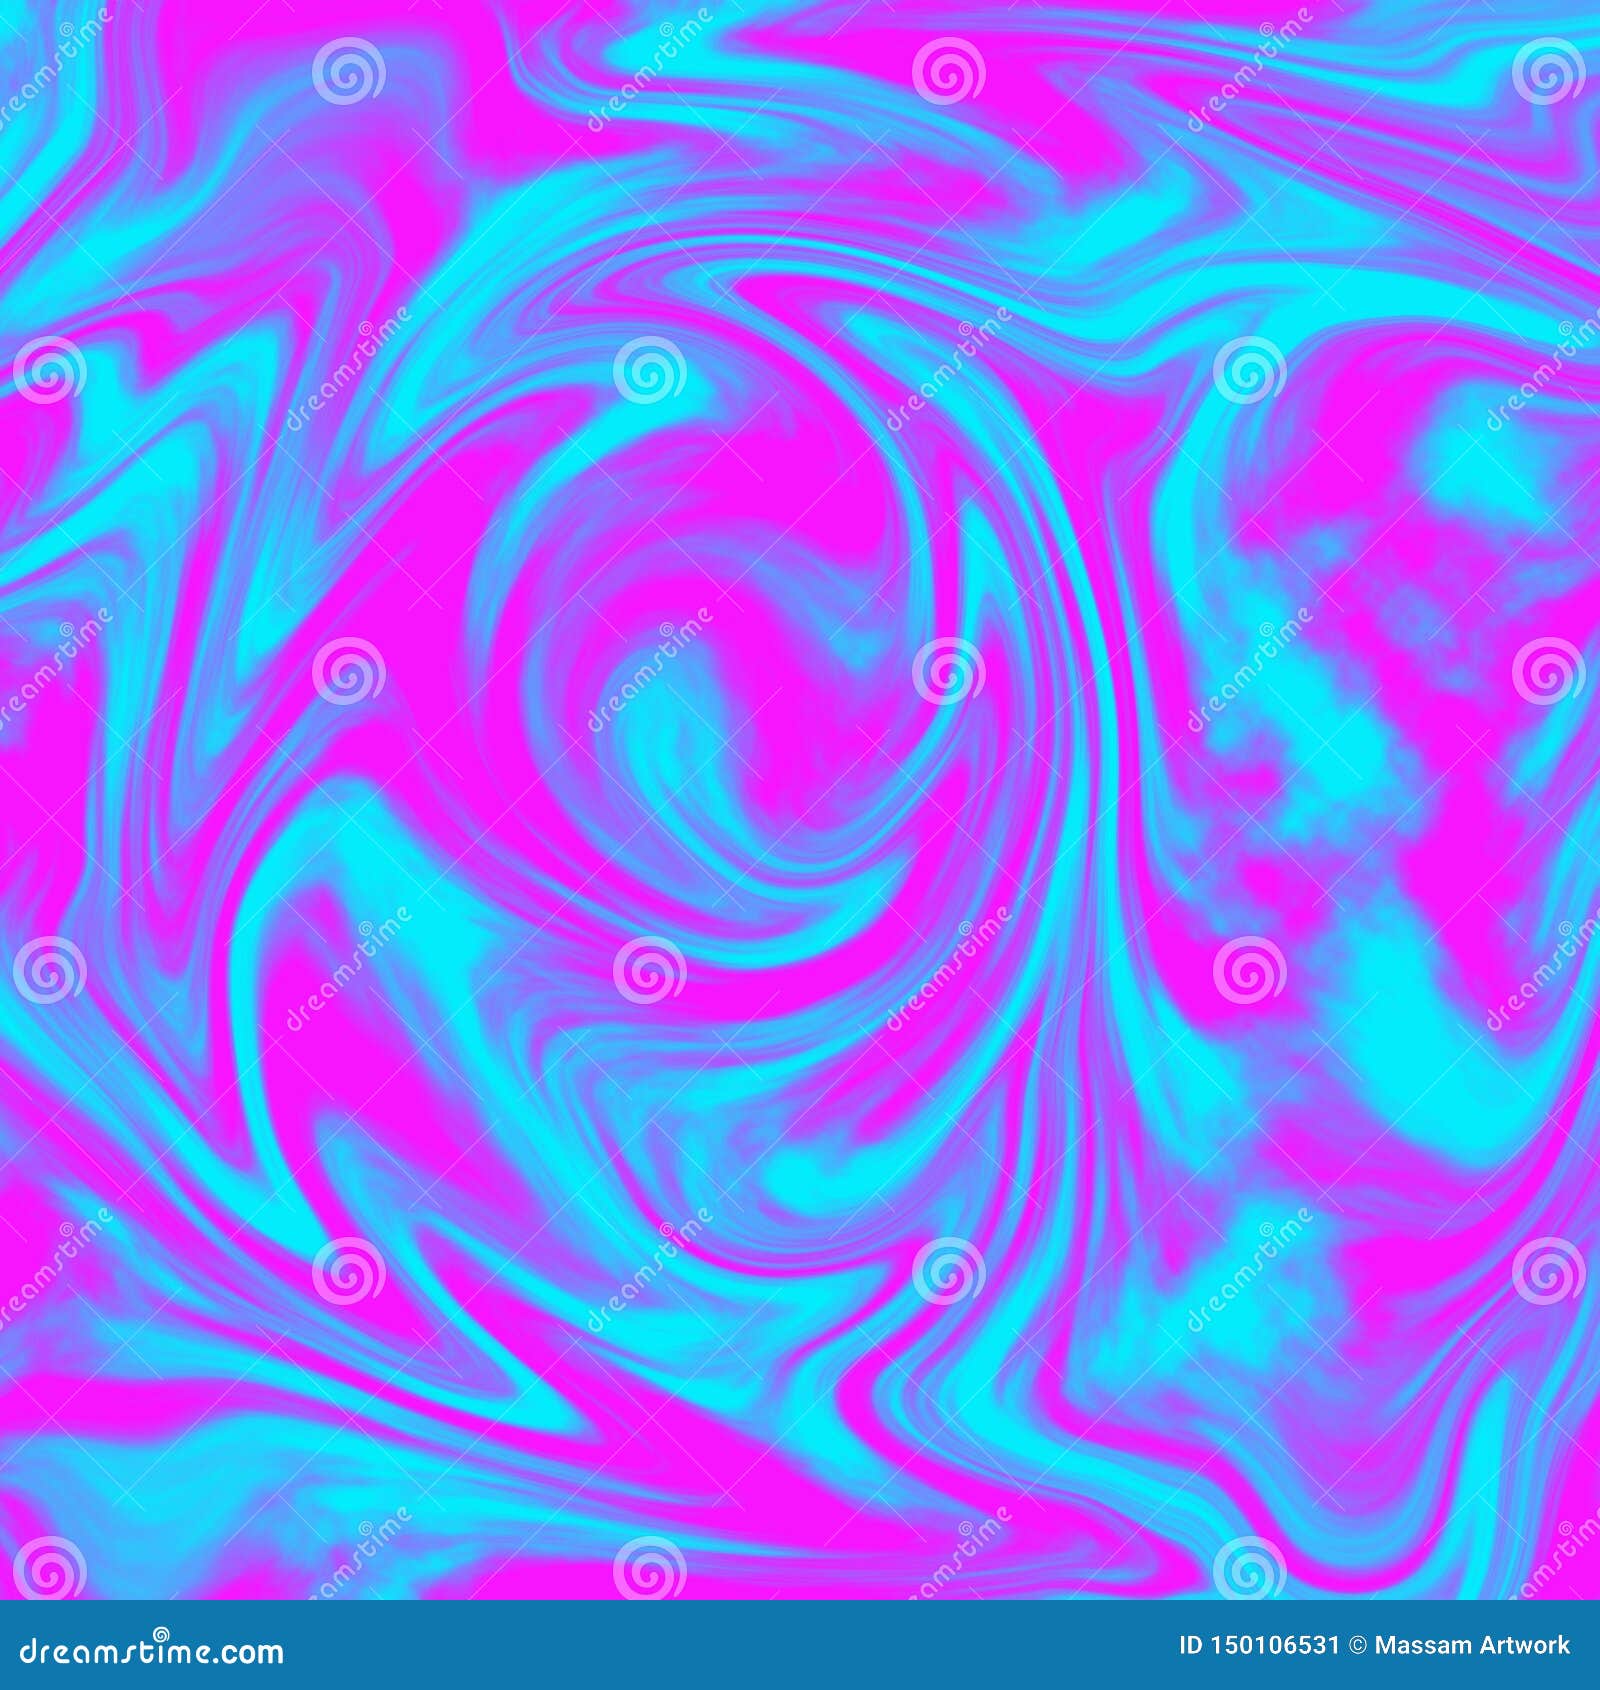 Cool Liquid Wallpaper Combination of Blue and Pink. Digital Liquid  Illustration Stock Illustration - Illustration of headline, backdrop:  150106531